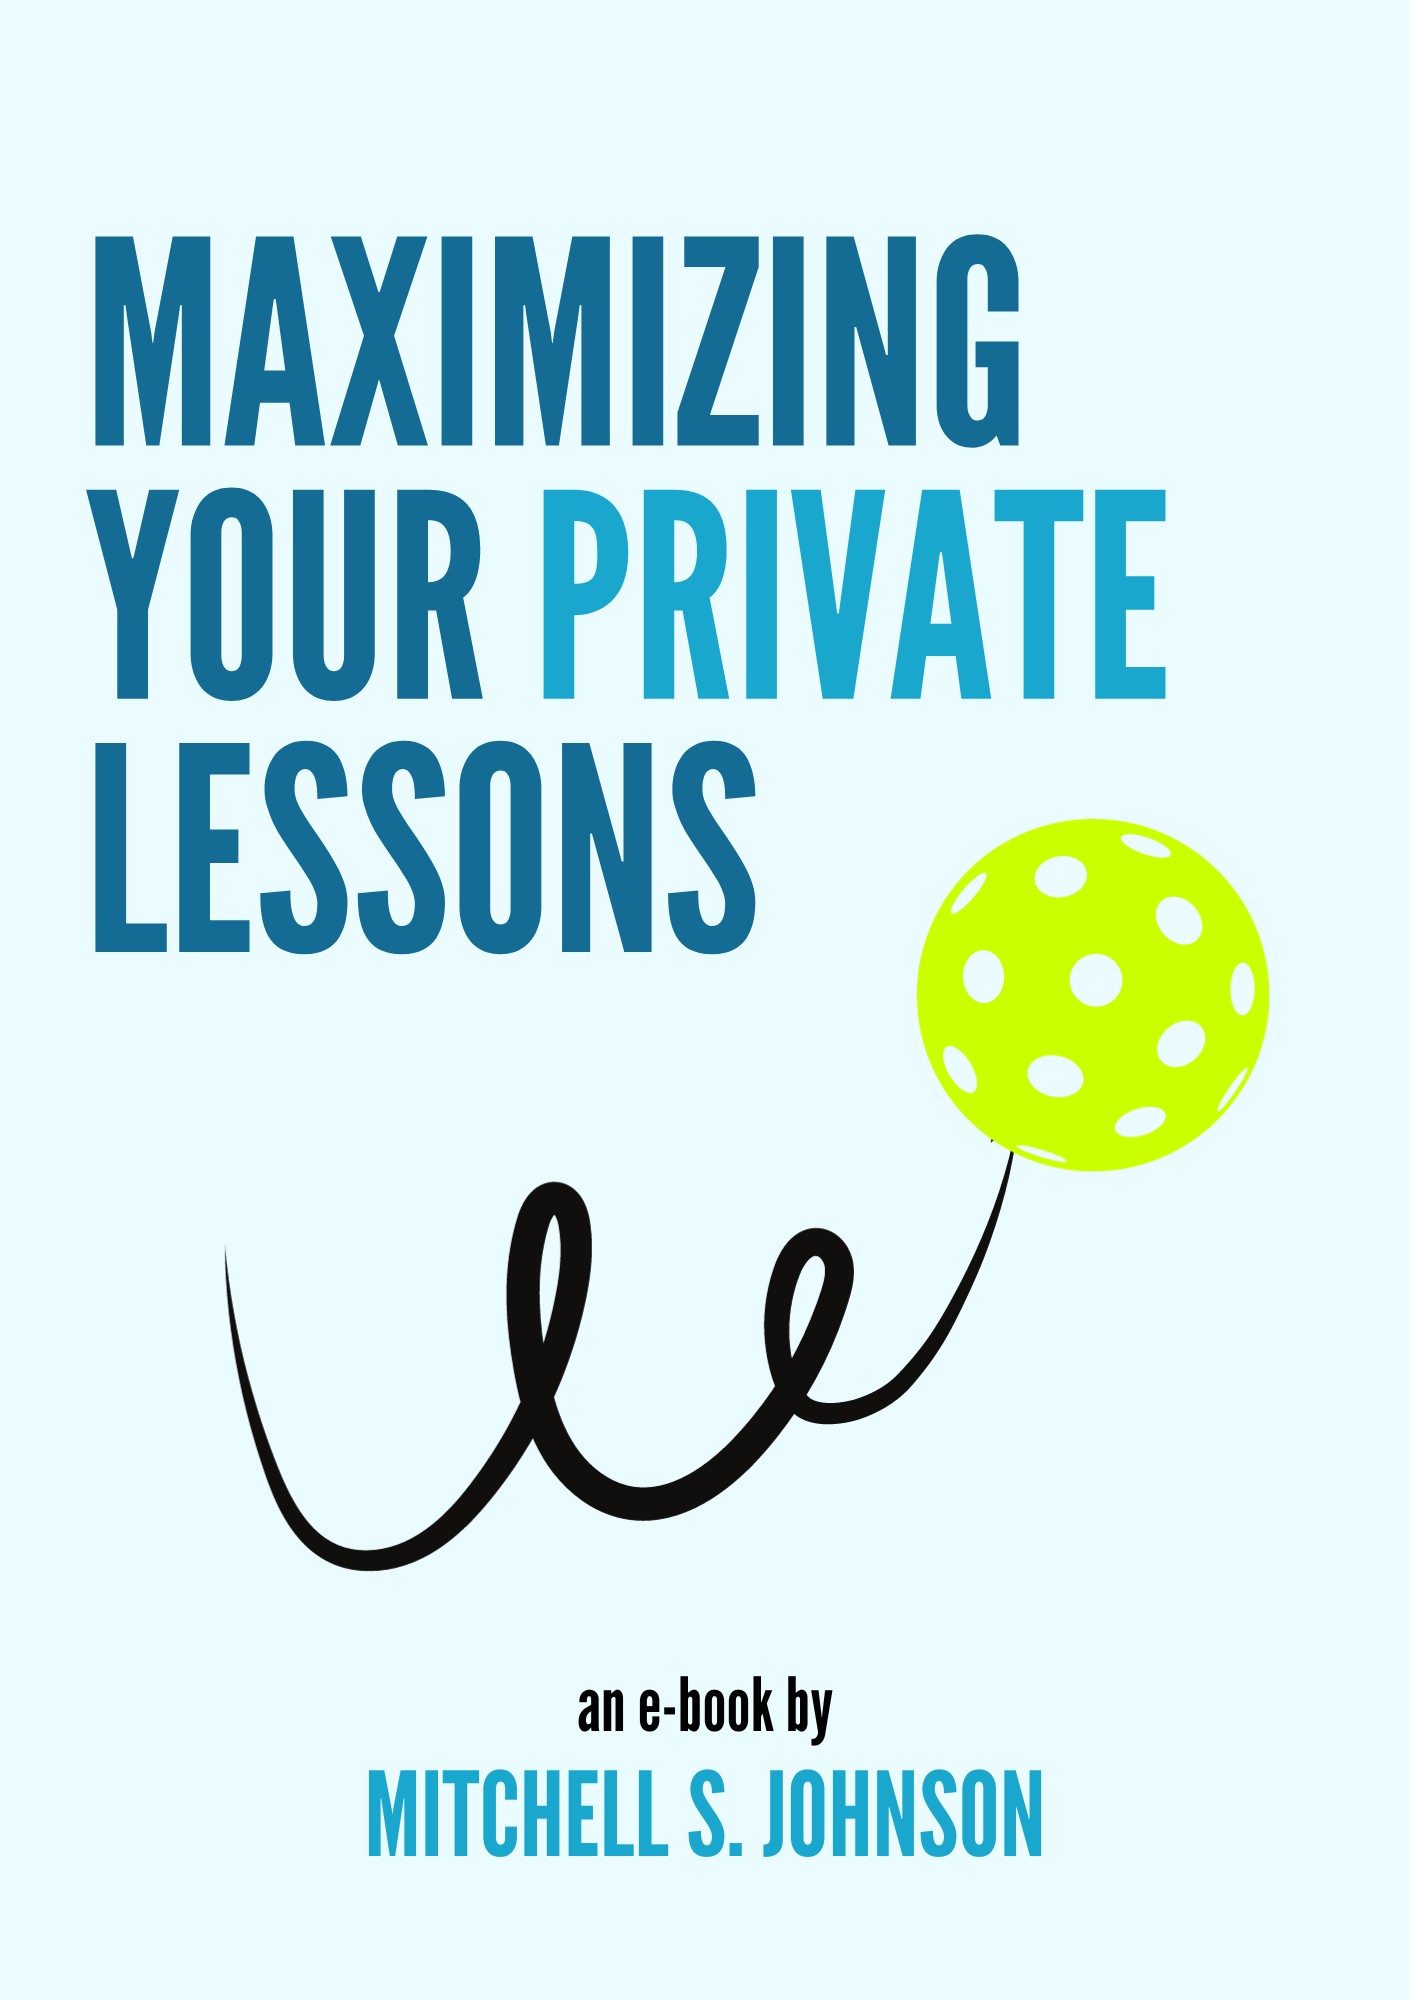 e-Book: Maximizing Your Private Lessons